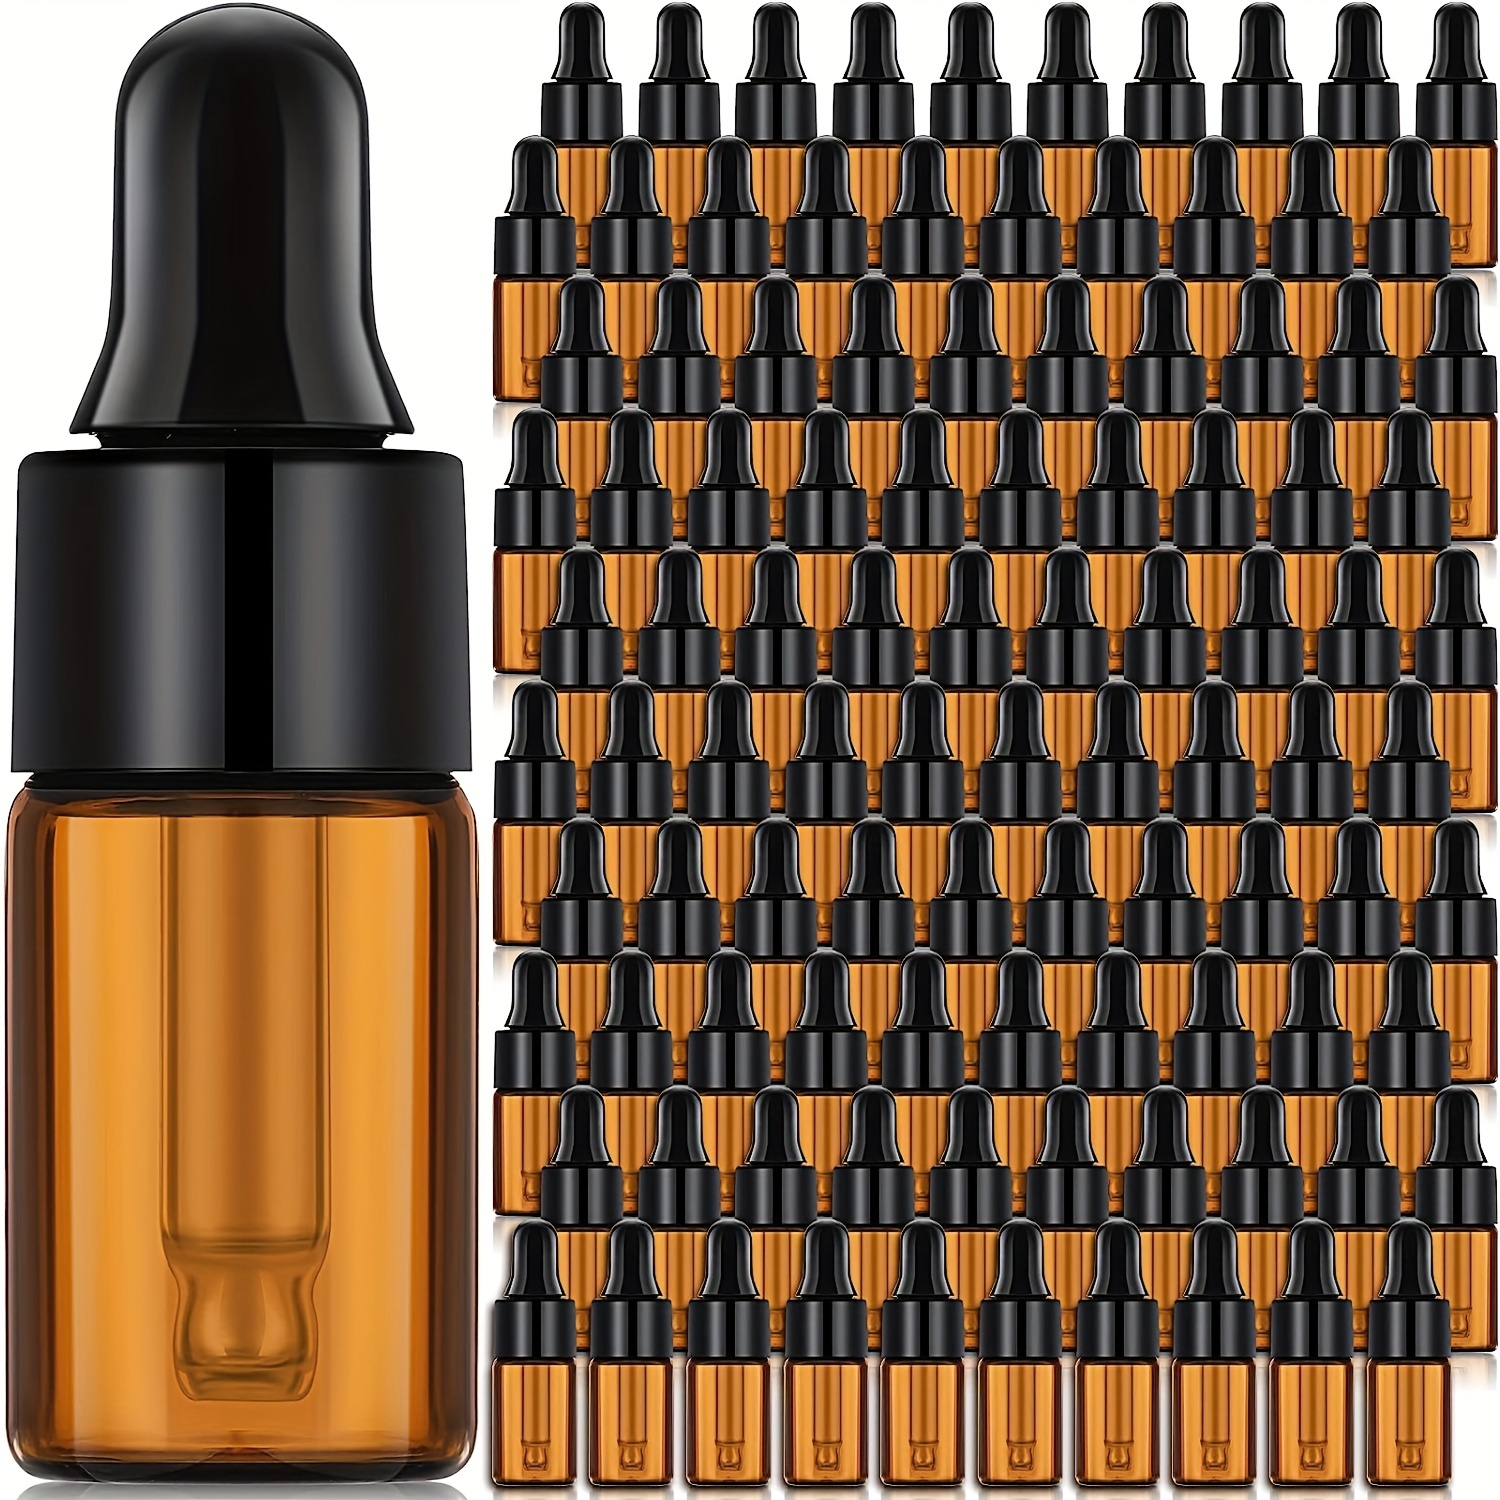 Glass Amber bottle with golden dropper 2 Packs – Shoprythm